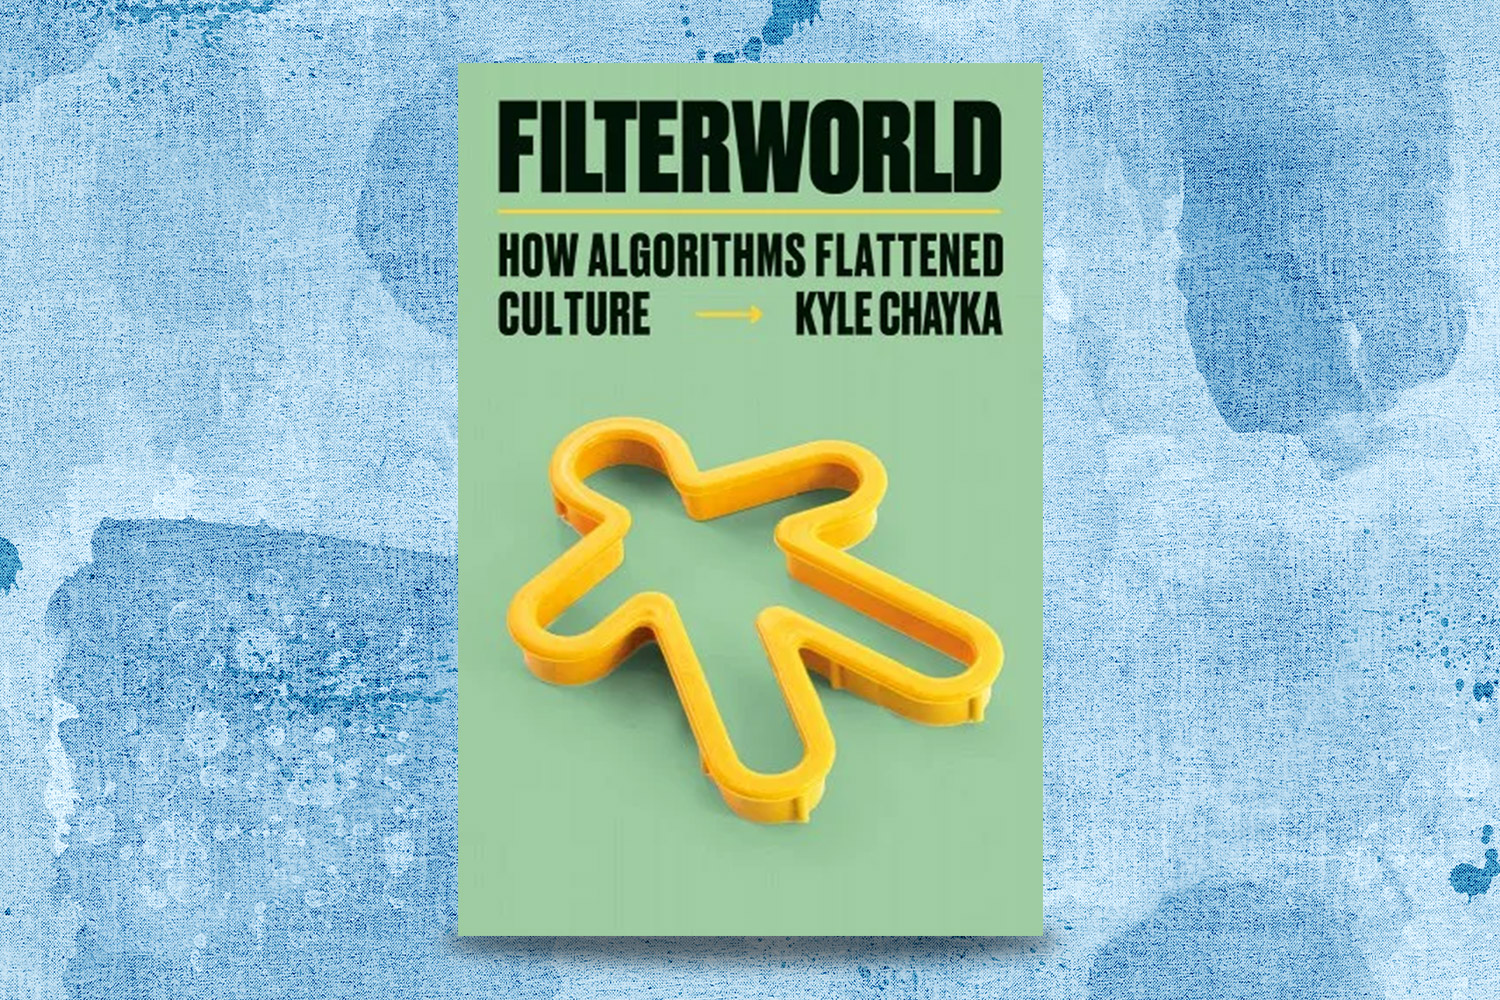 Kyle Chayka, Filterworld: How Algorithms Flattened Culture